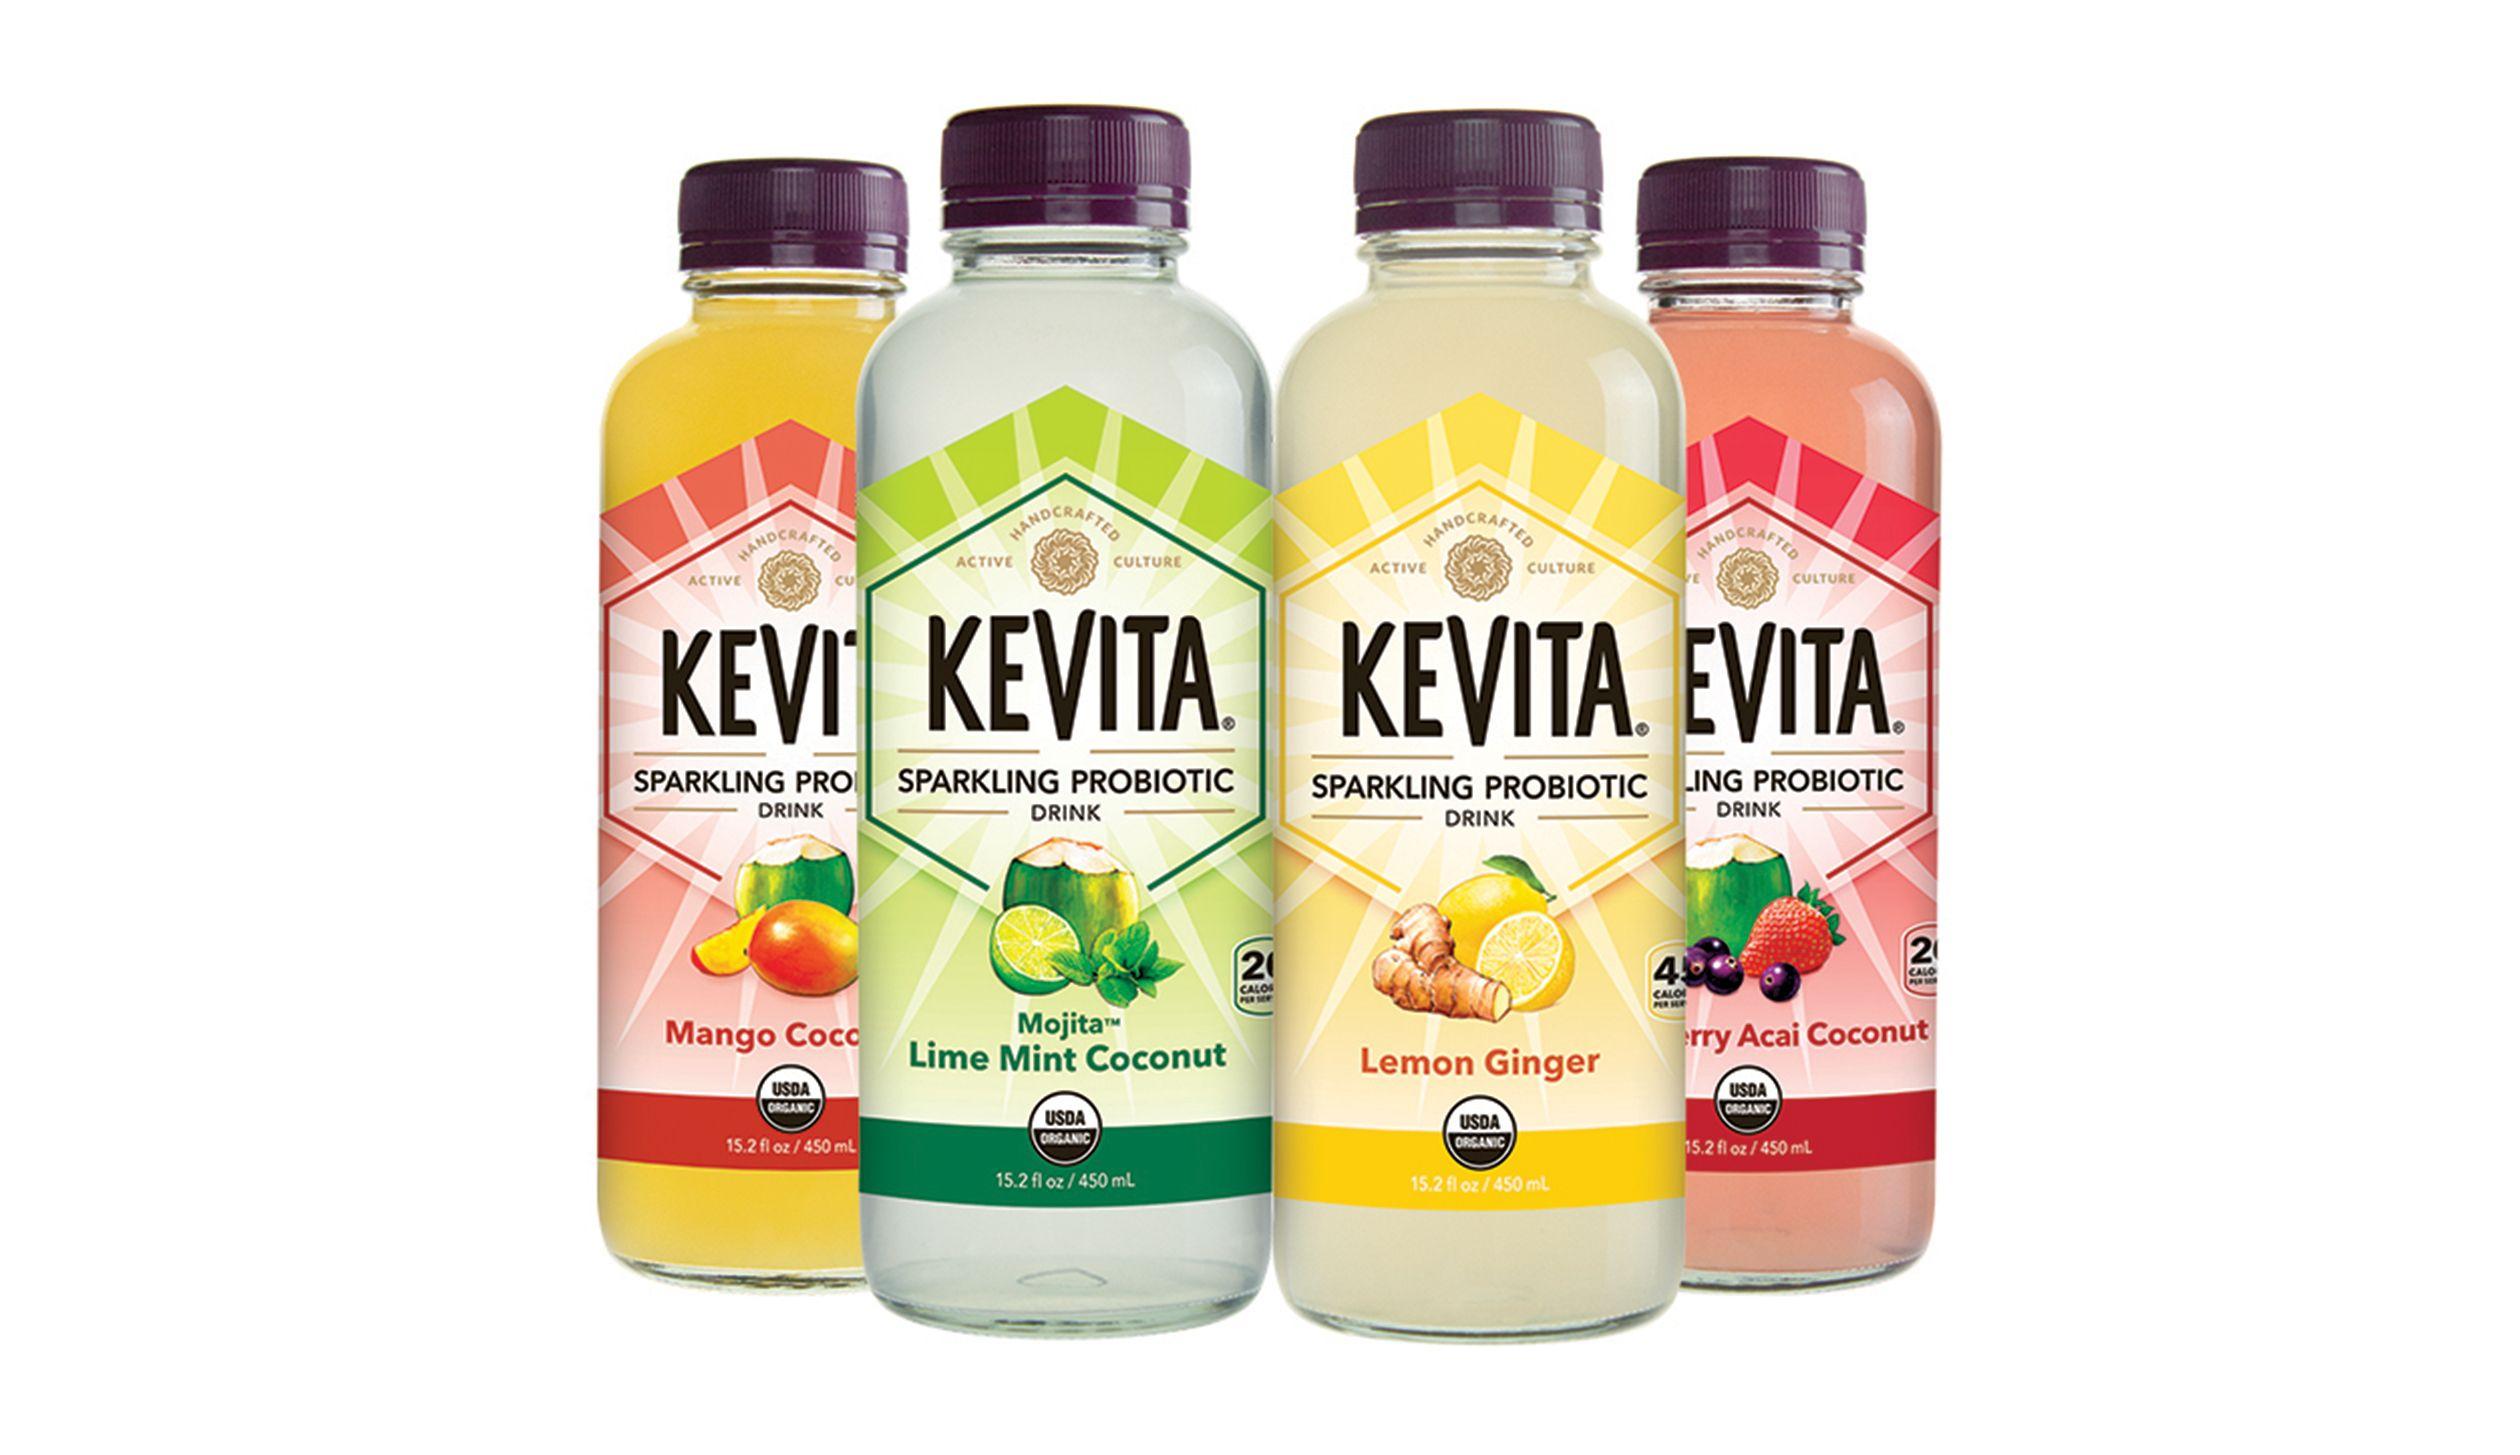 Exclusive: PepsiCo to Acquire Probiotic Drinks Maker KeVita